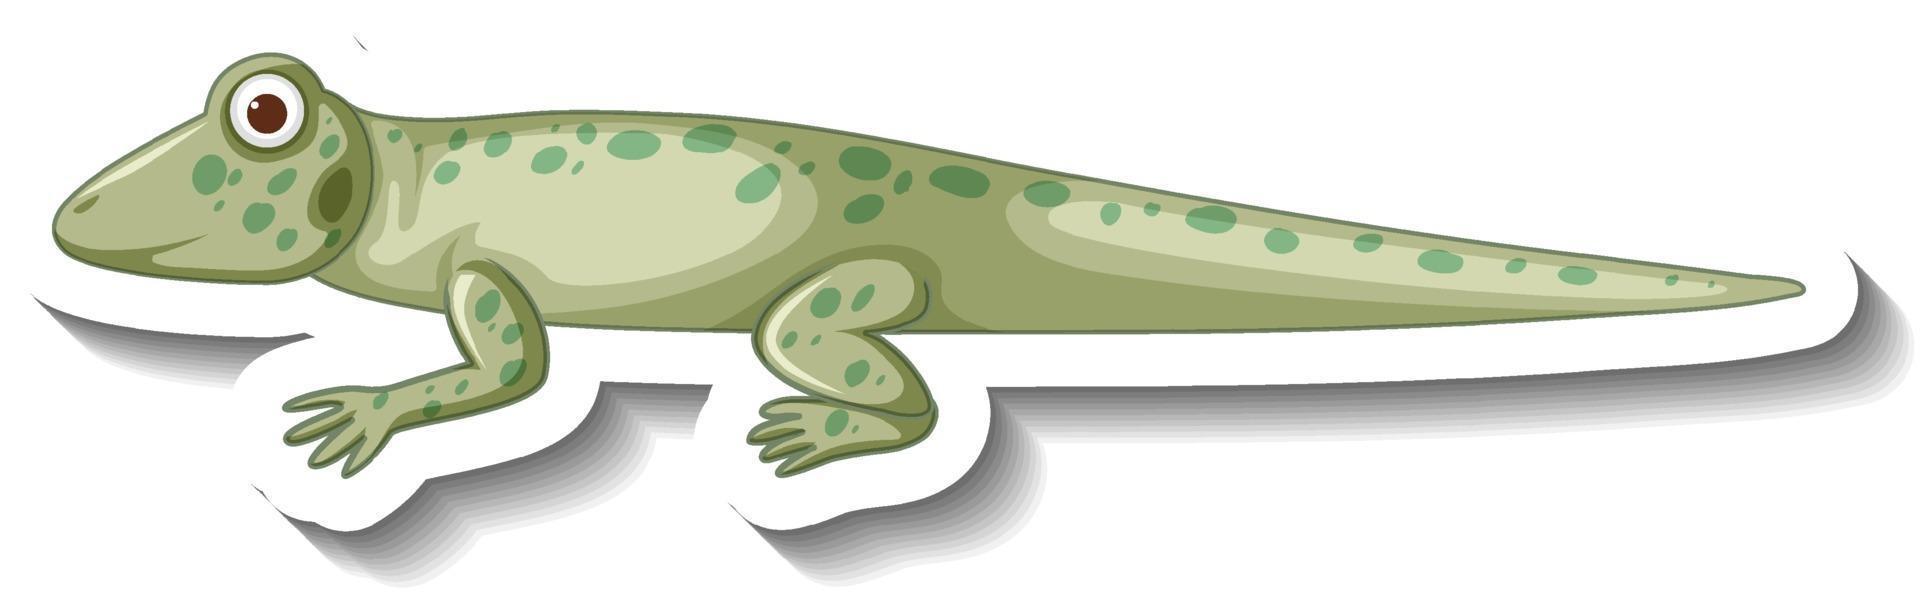 Vista lateral de la etiqueta engomada de dibujos animados de gecko o lagarto vector